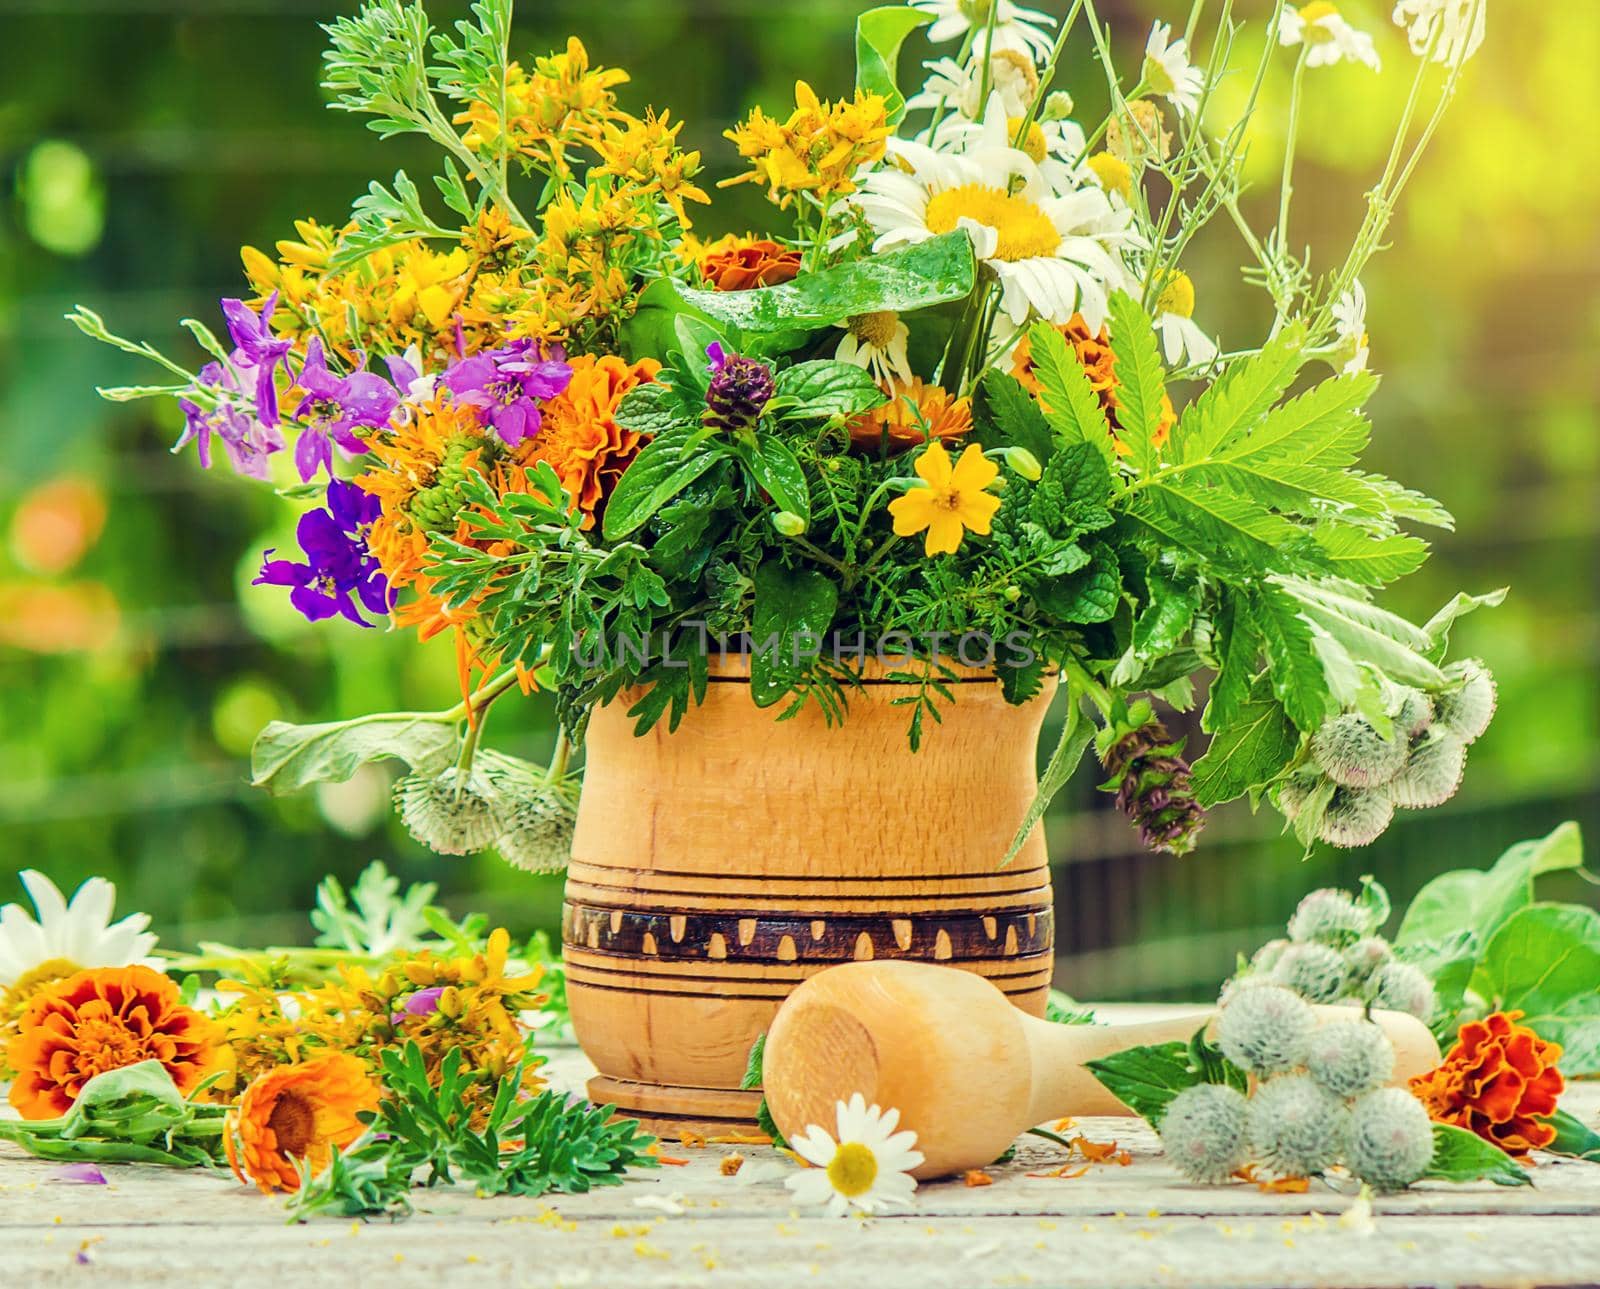 Herbs in a mortar. Medicinal plants. Selective focus. by yanadjana